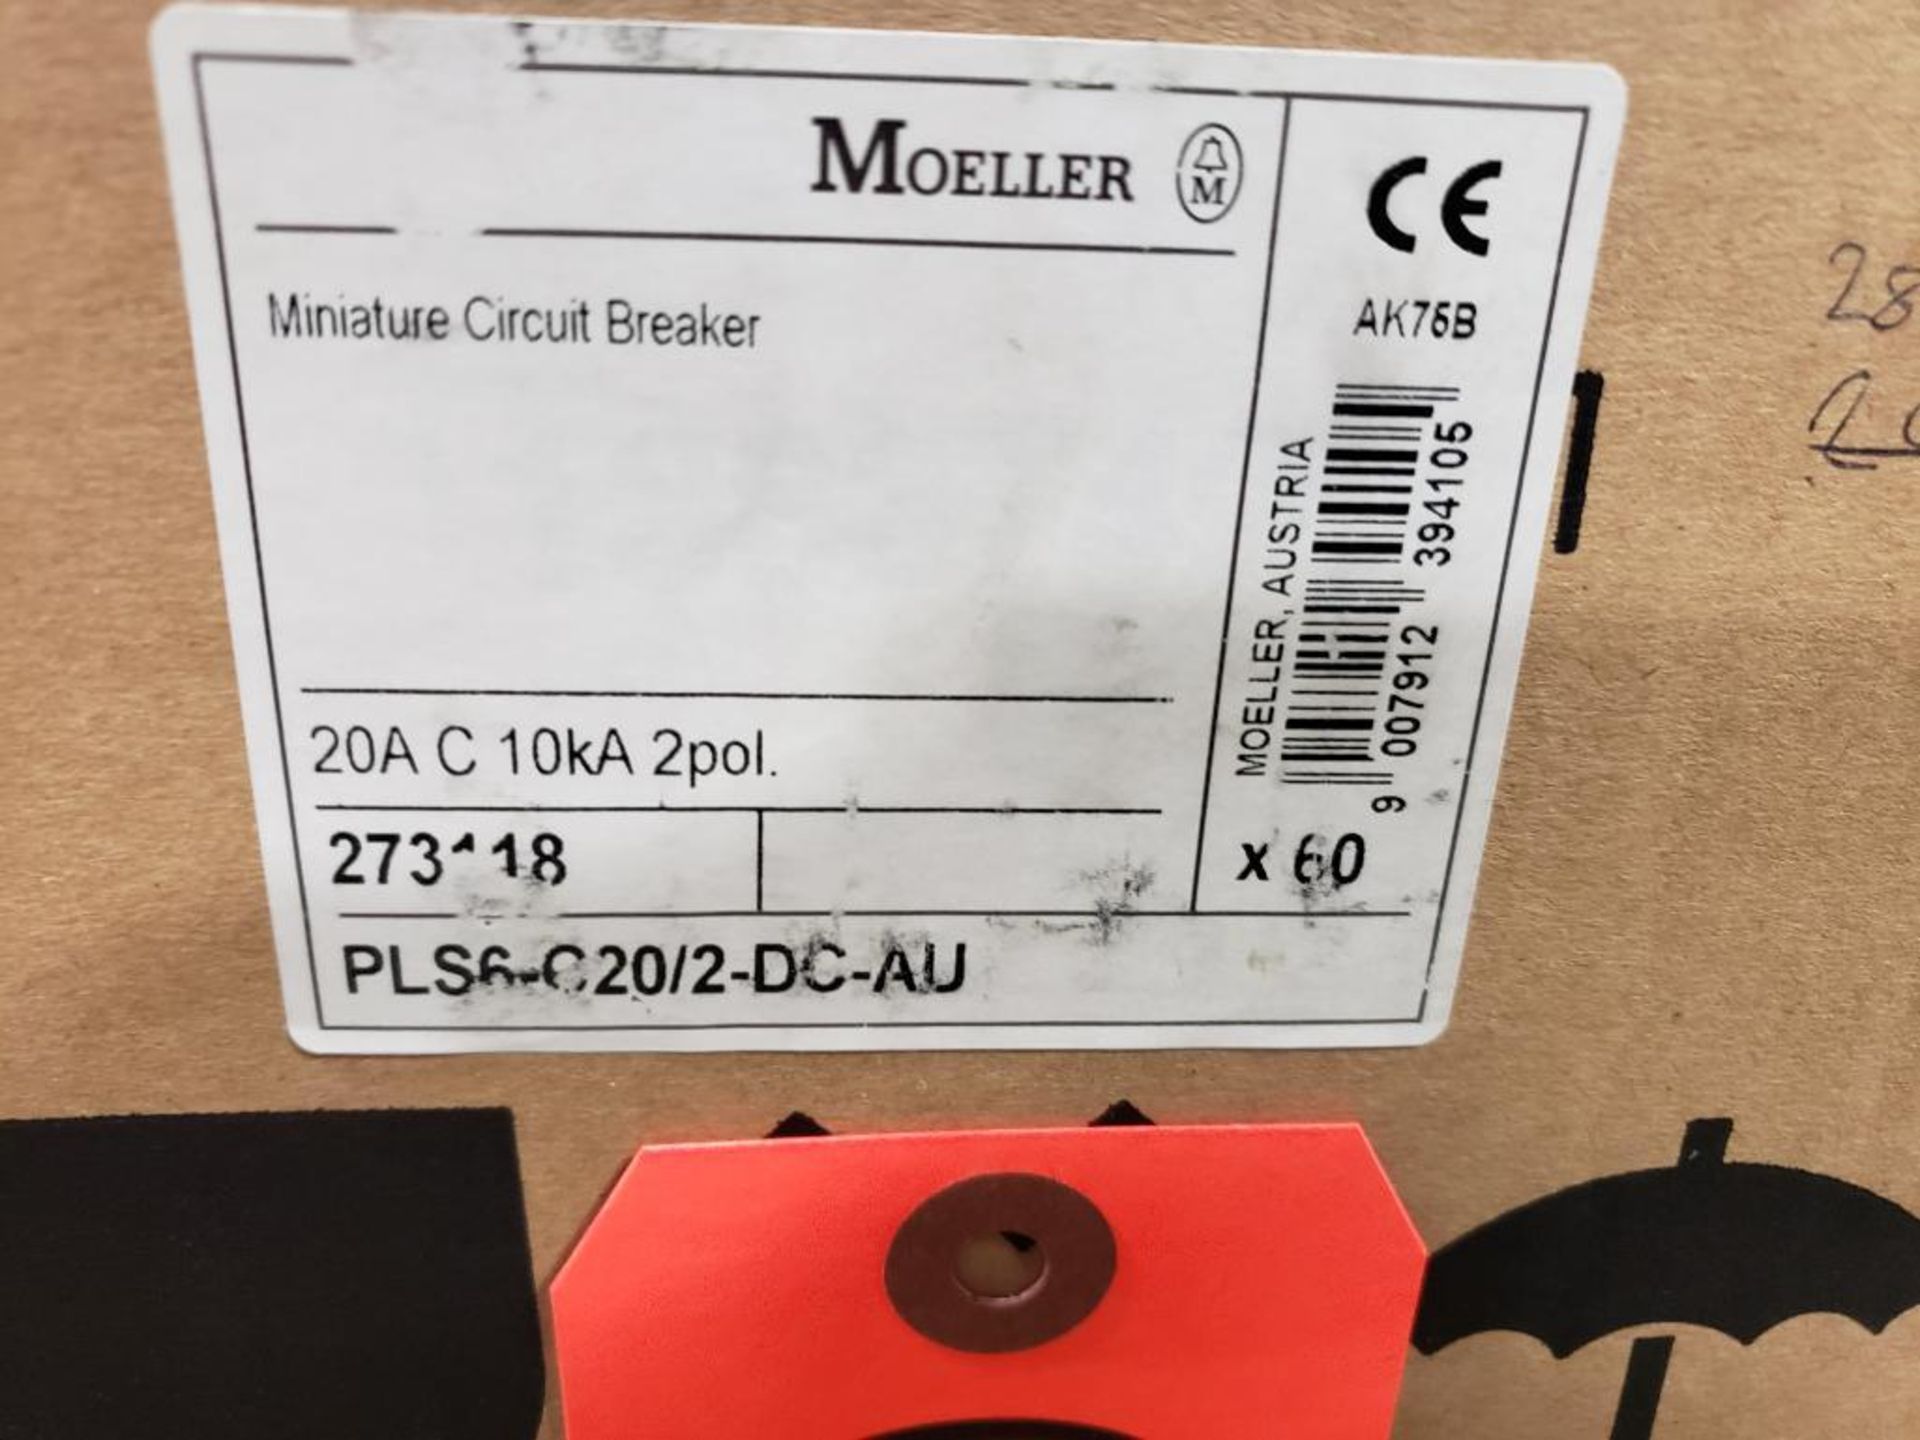 Qty 60 - Moeller 273118 PLS6-C20/2-DC-AU circuit breaker. 20AMP, 2-Pole. 60Ct Box. New in box. - Image 2 of 4